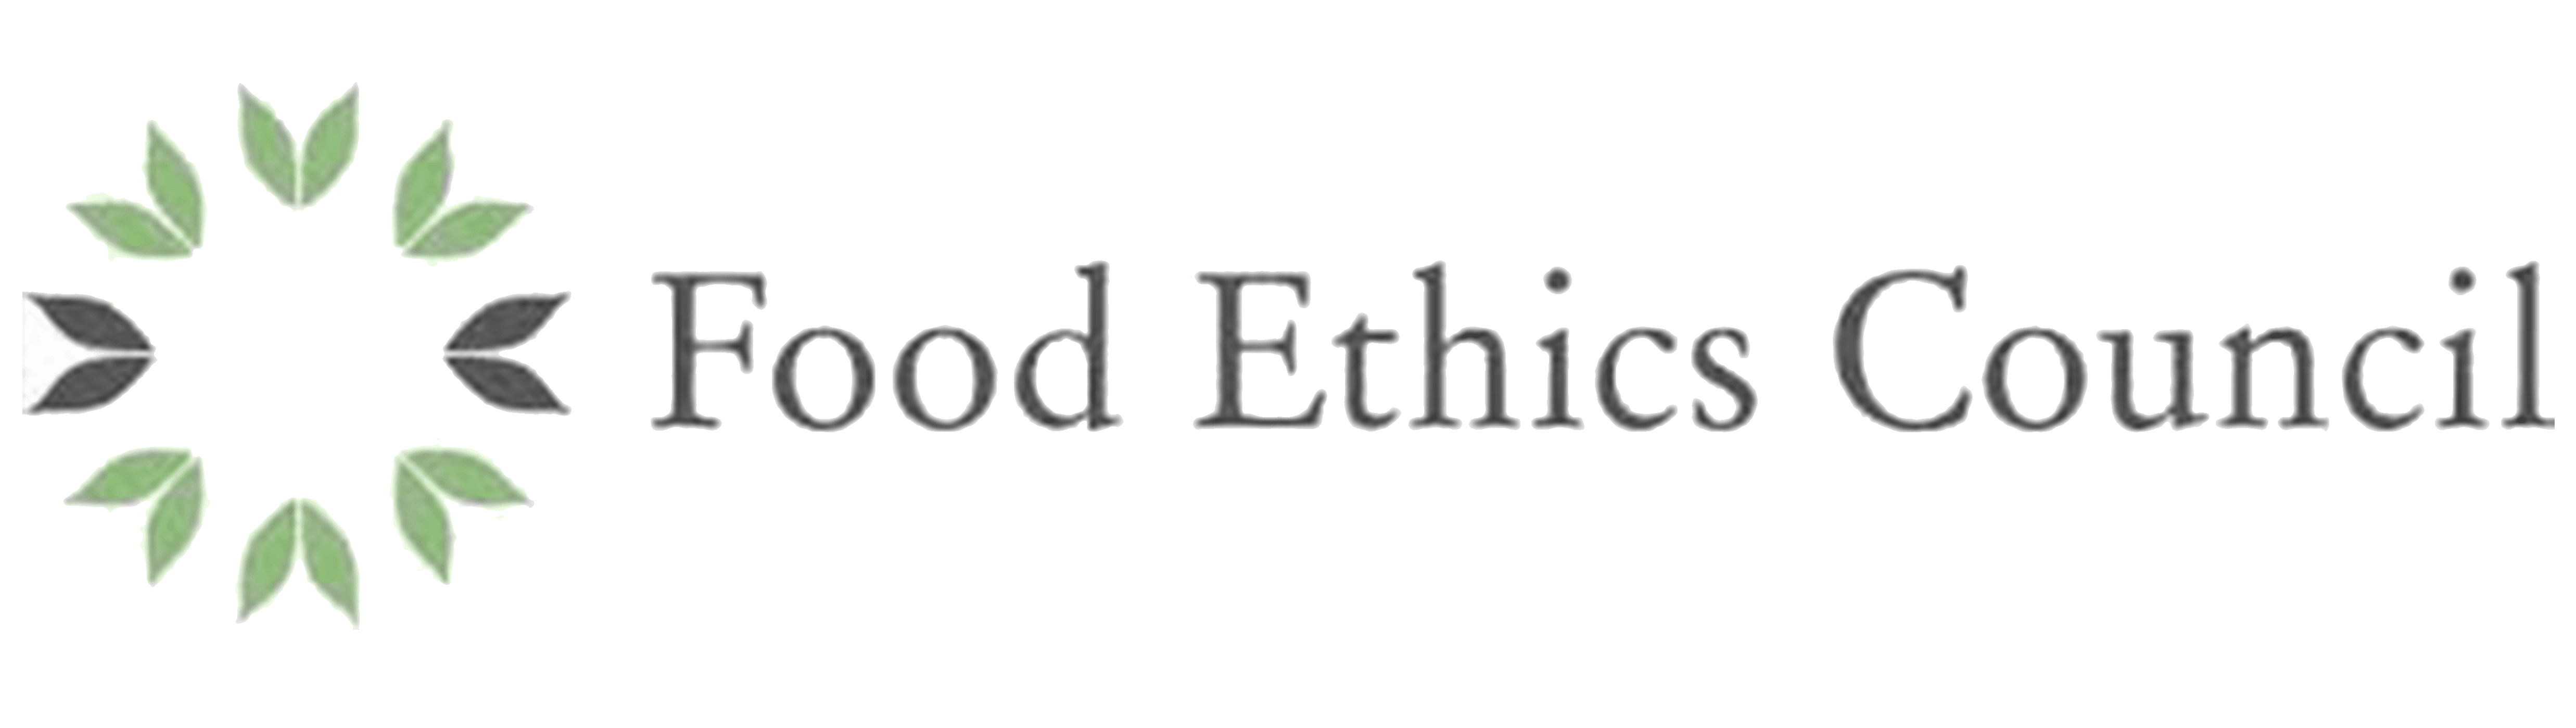 food ethics council logo